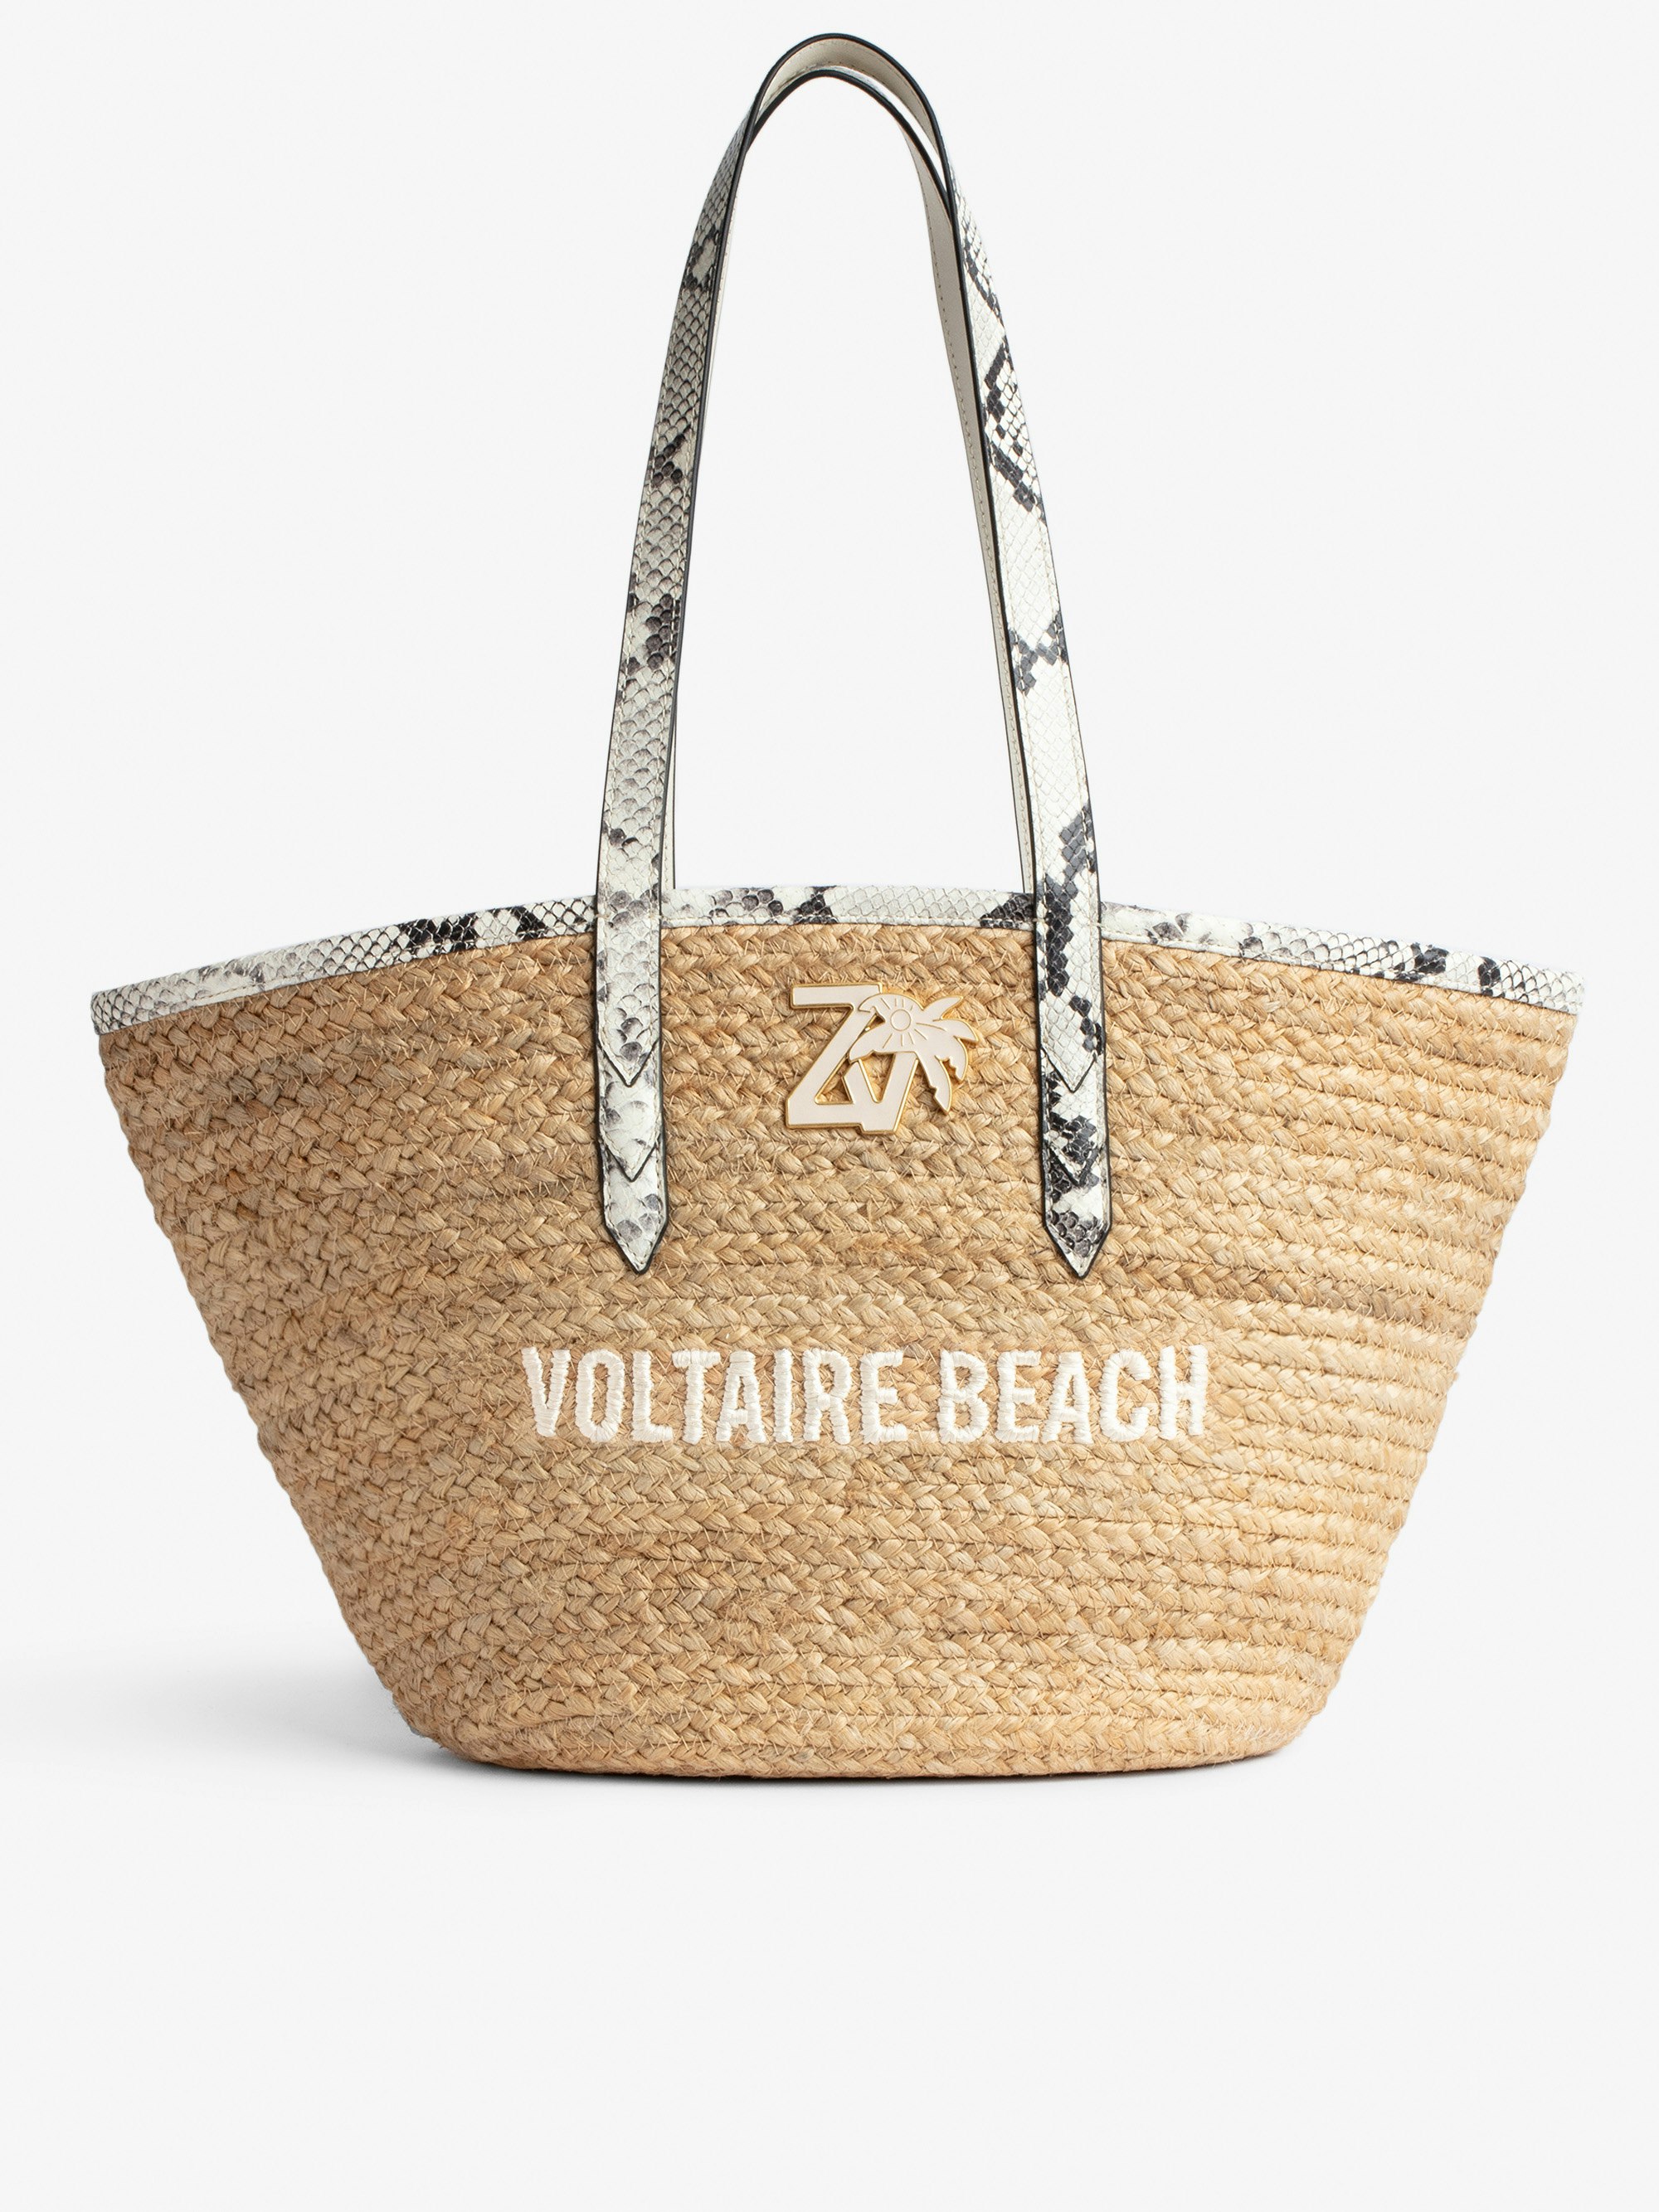 Bolso Le Beach Bag - Bolso de paja con asas de cuero color crudo efecto pitón, bordado «Voltaire Beach» y con colgante ZV Mujer